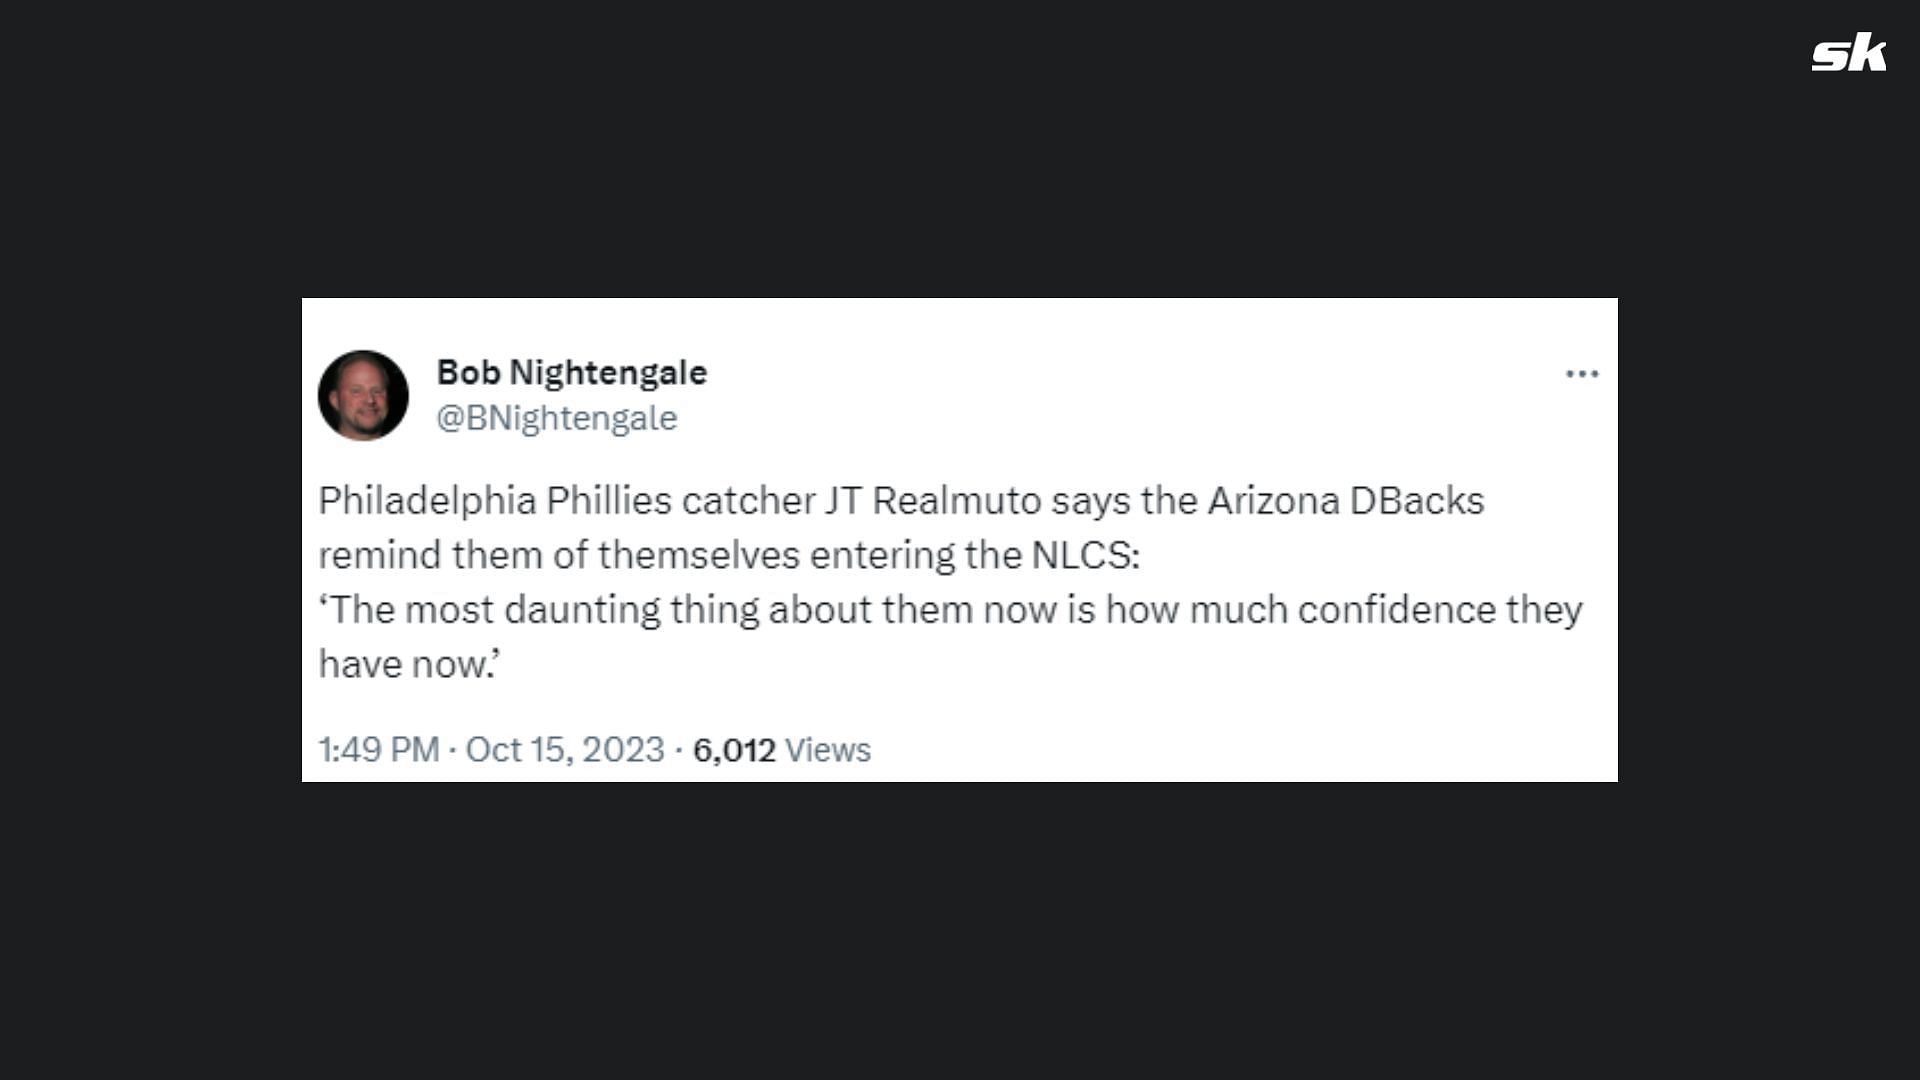 The MLB analyst reiterates JT Realmuto&#039;s statement.